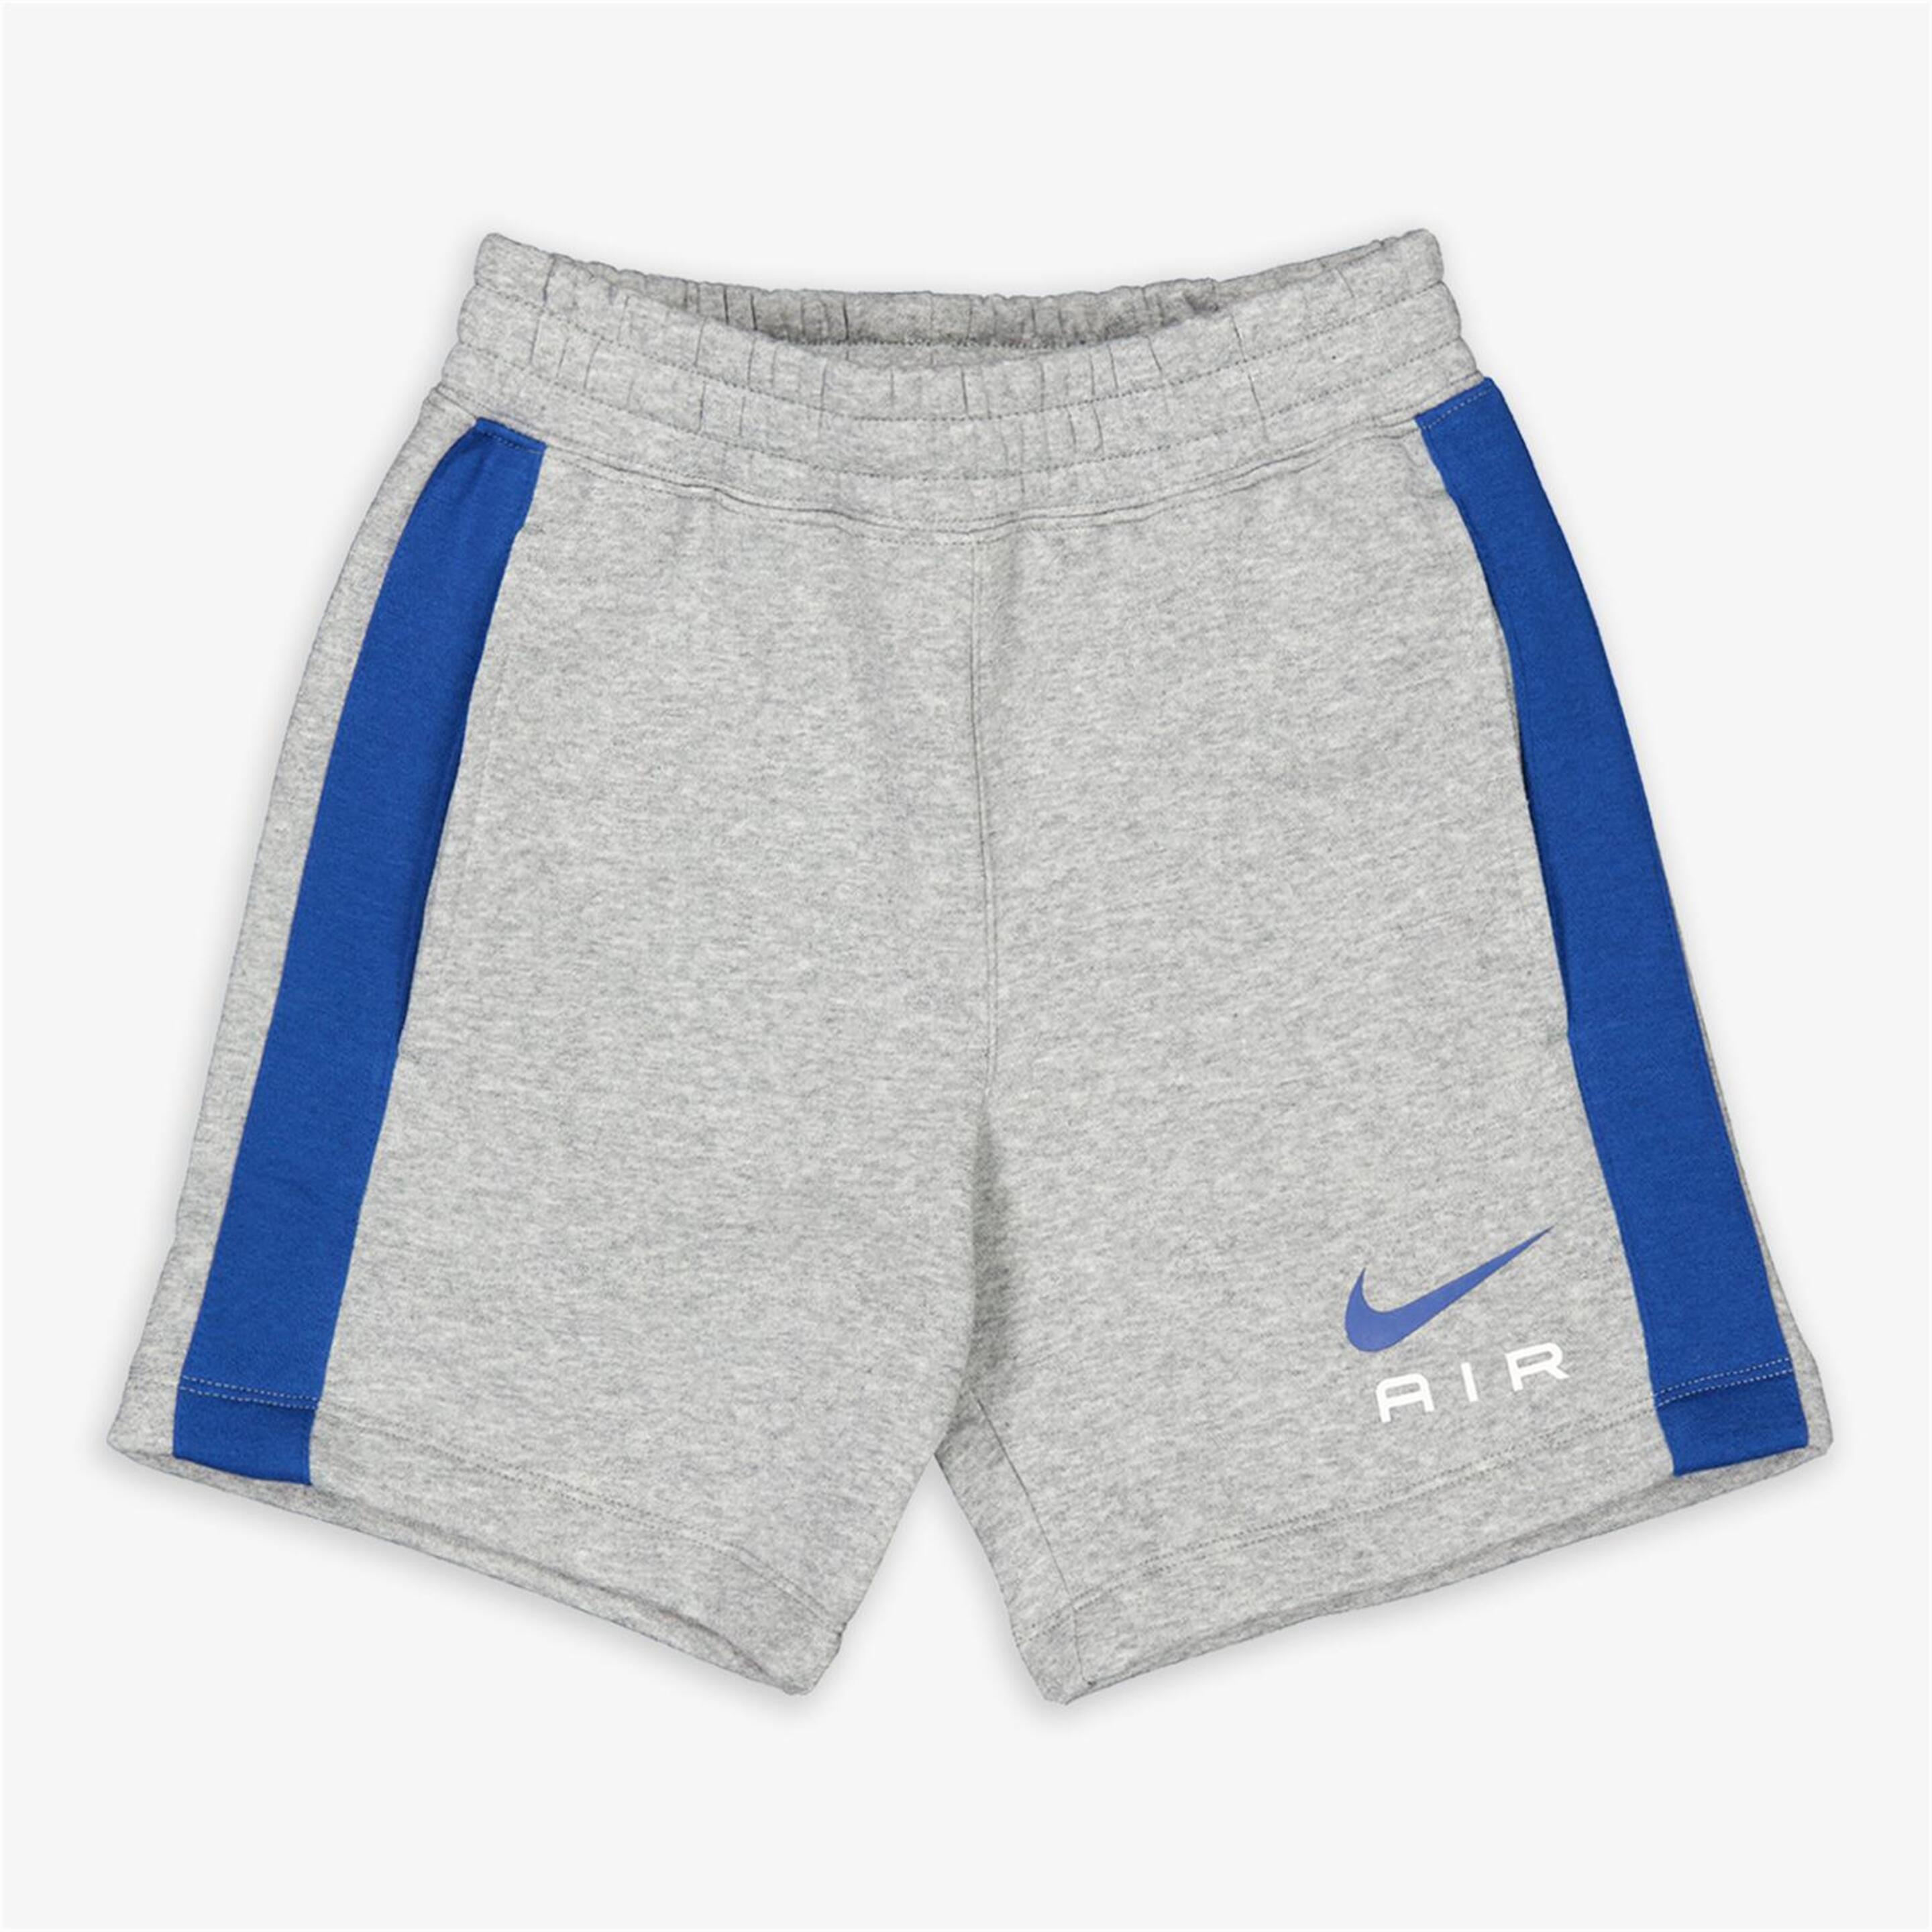 Pantalón Corto Nike - gris - Bermuda Deportiva Niño